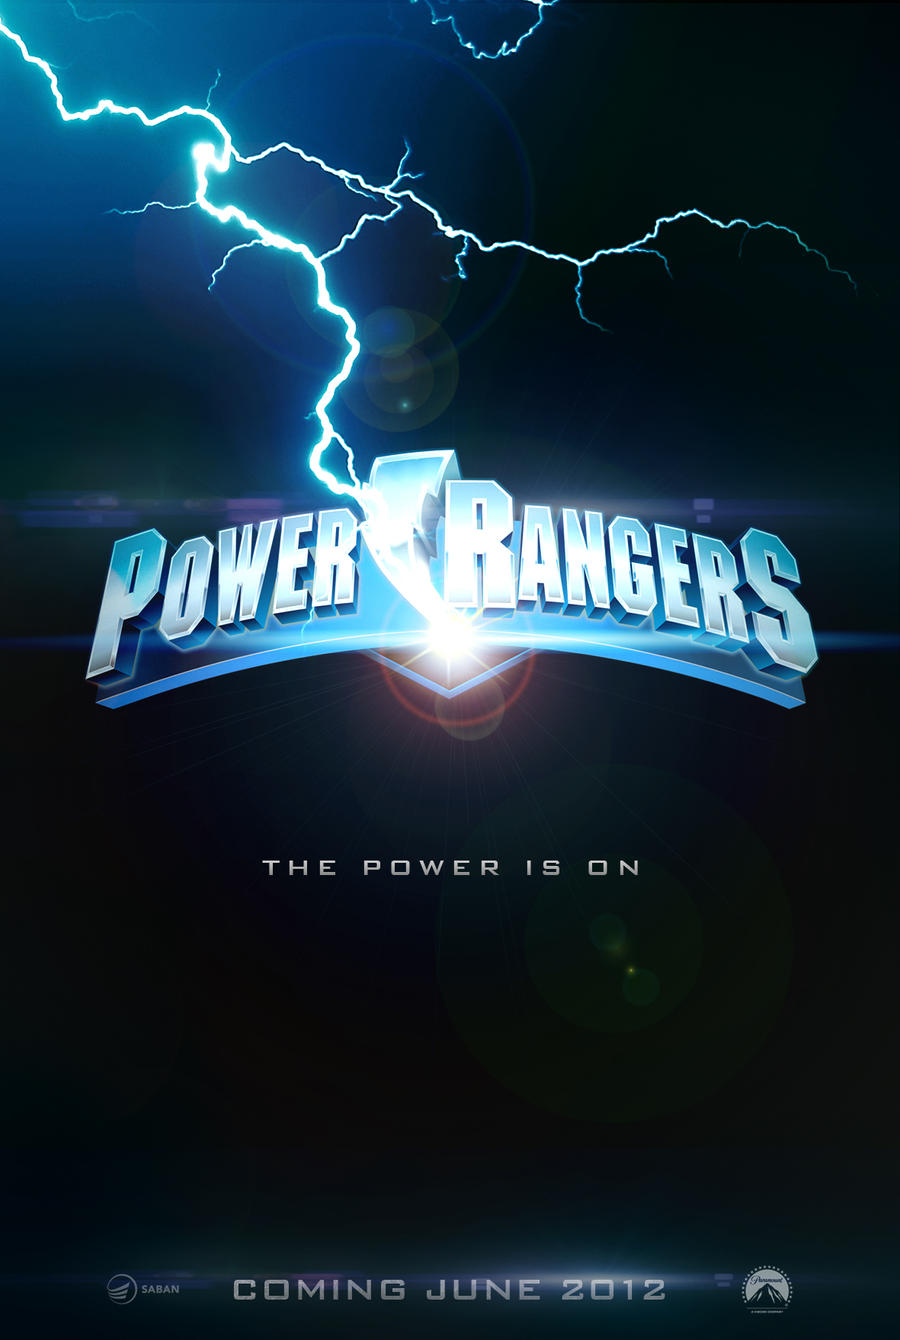 power_rangers___movie_poster_by_rafaelaveiro-d3goia6.jpg